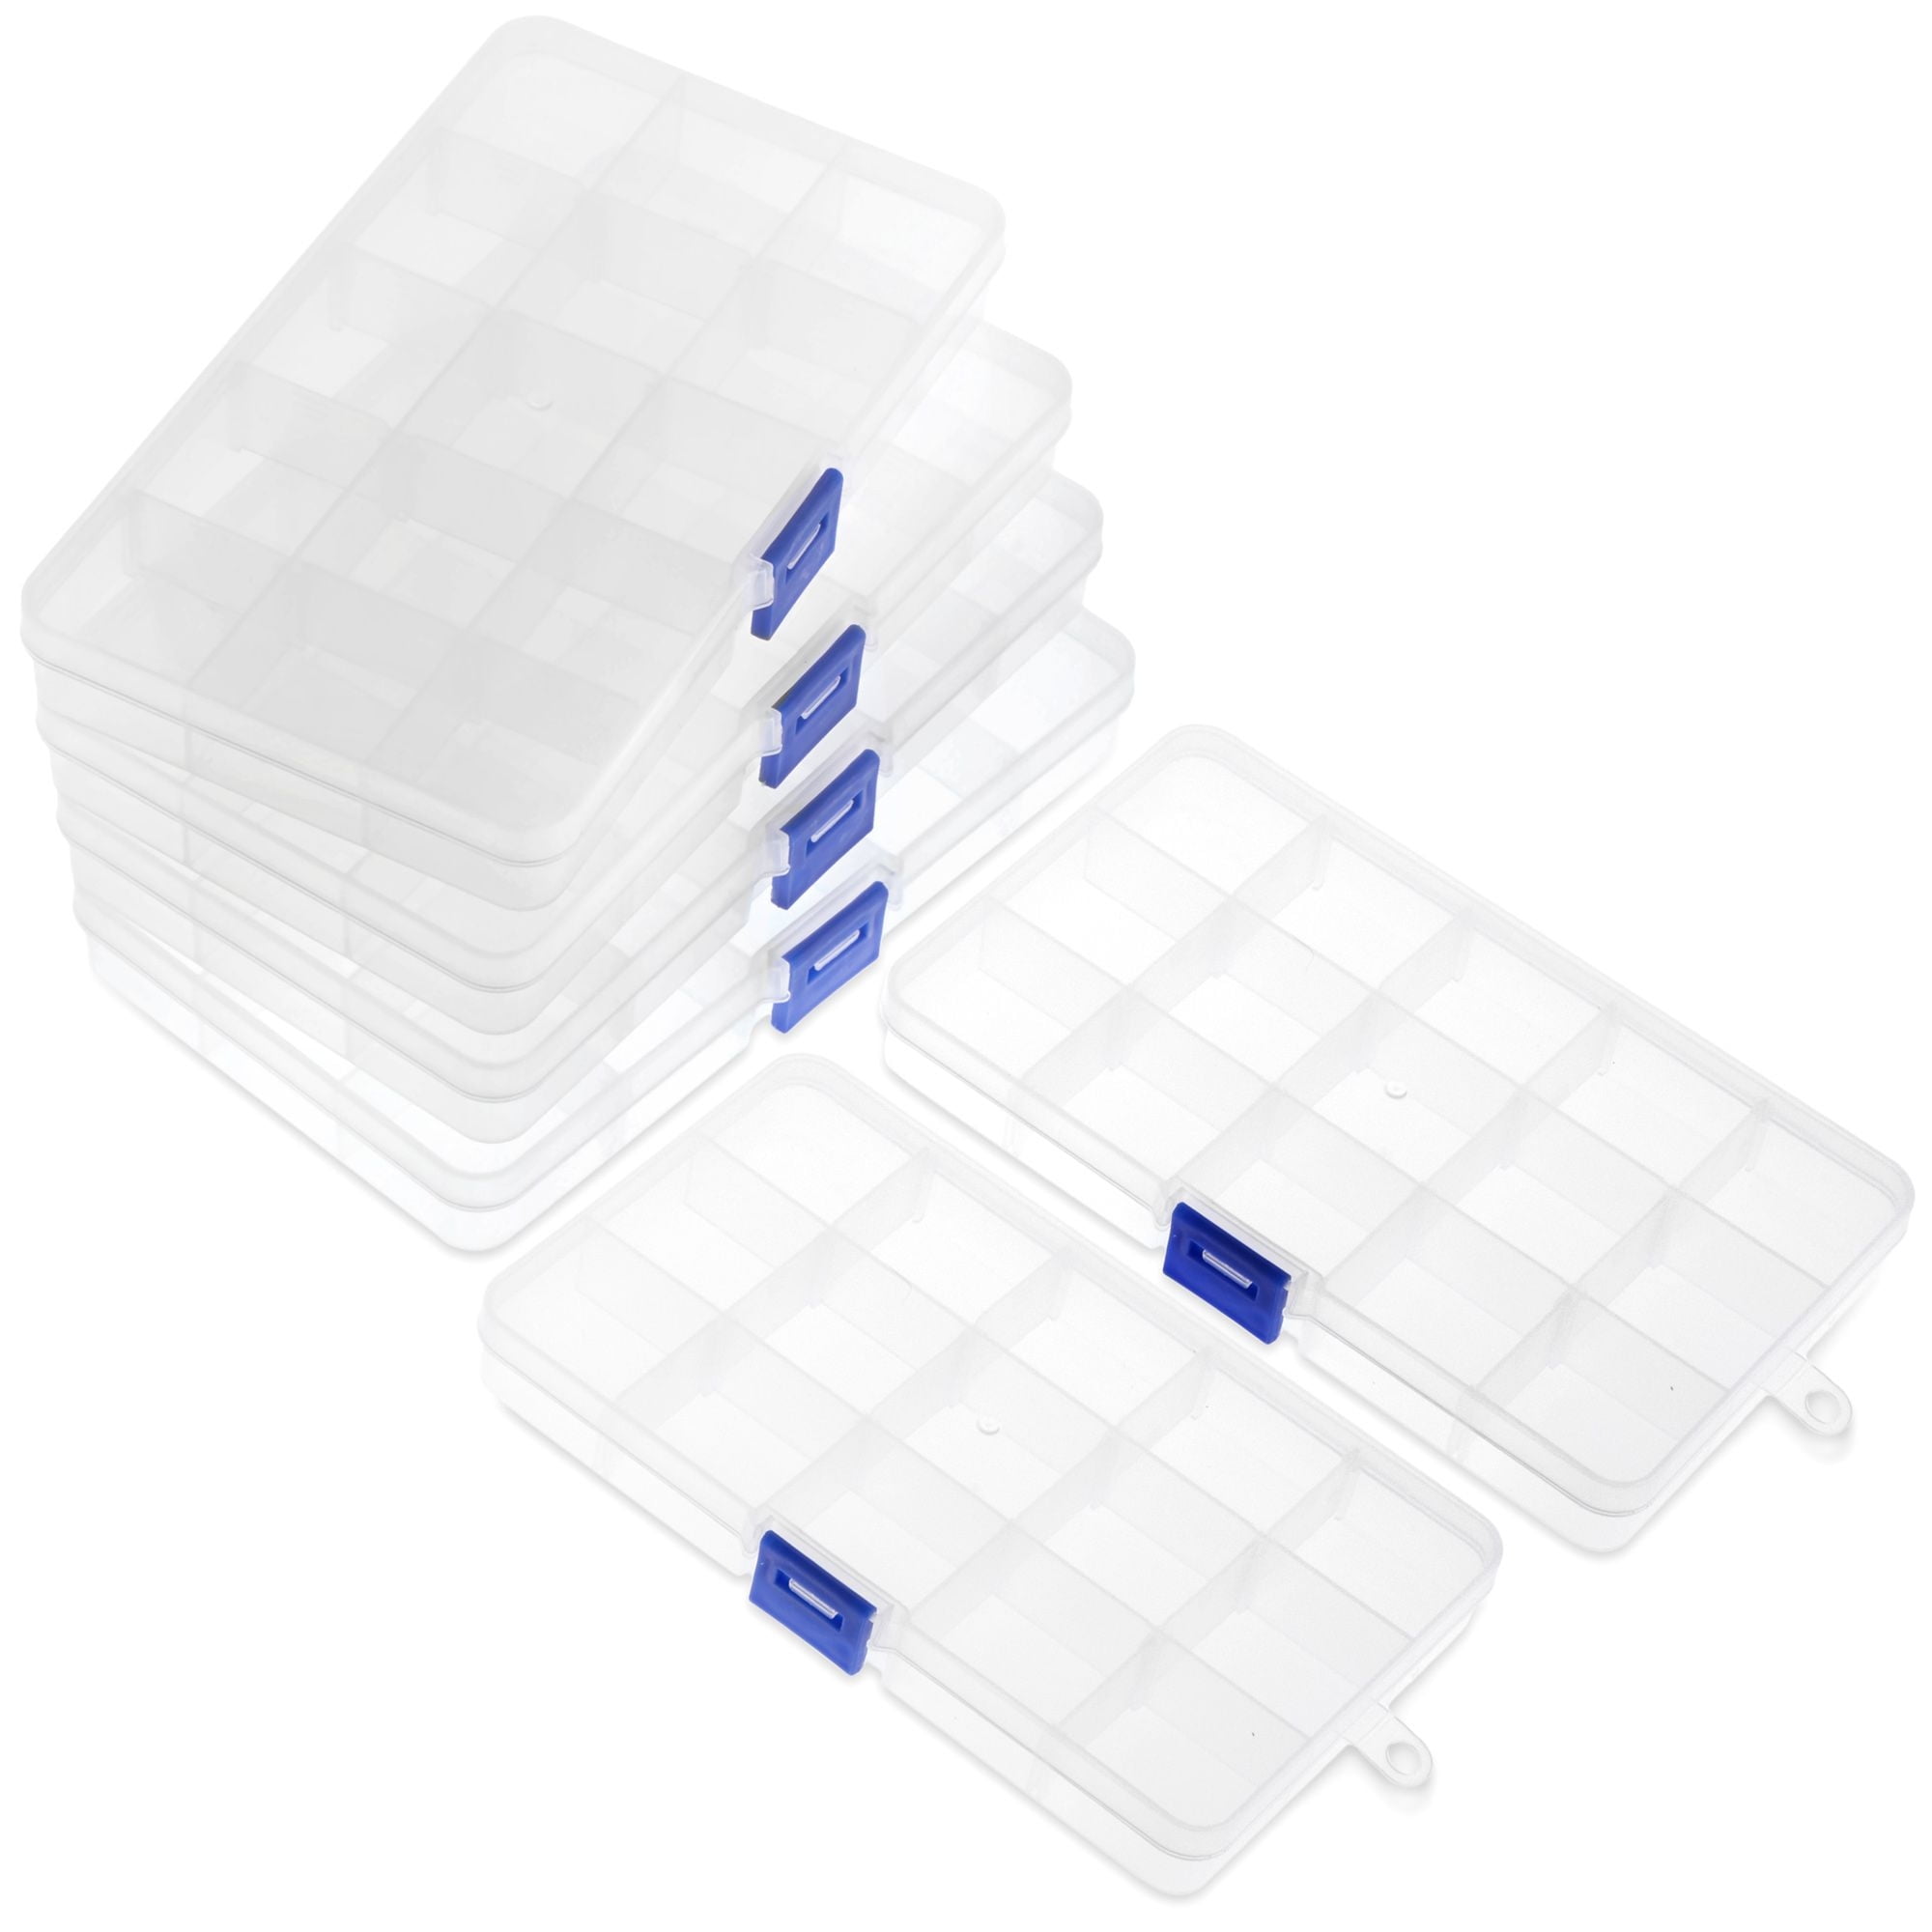 Qualsen Plastic Compartment Box with Adjustable Dividers Craft Tackle Organizer